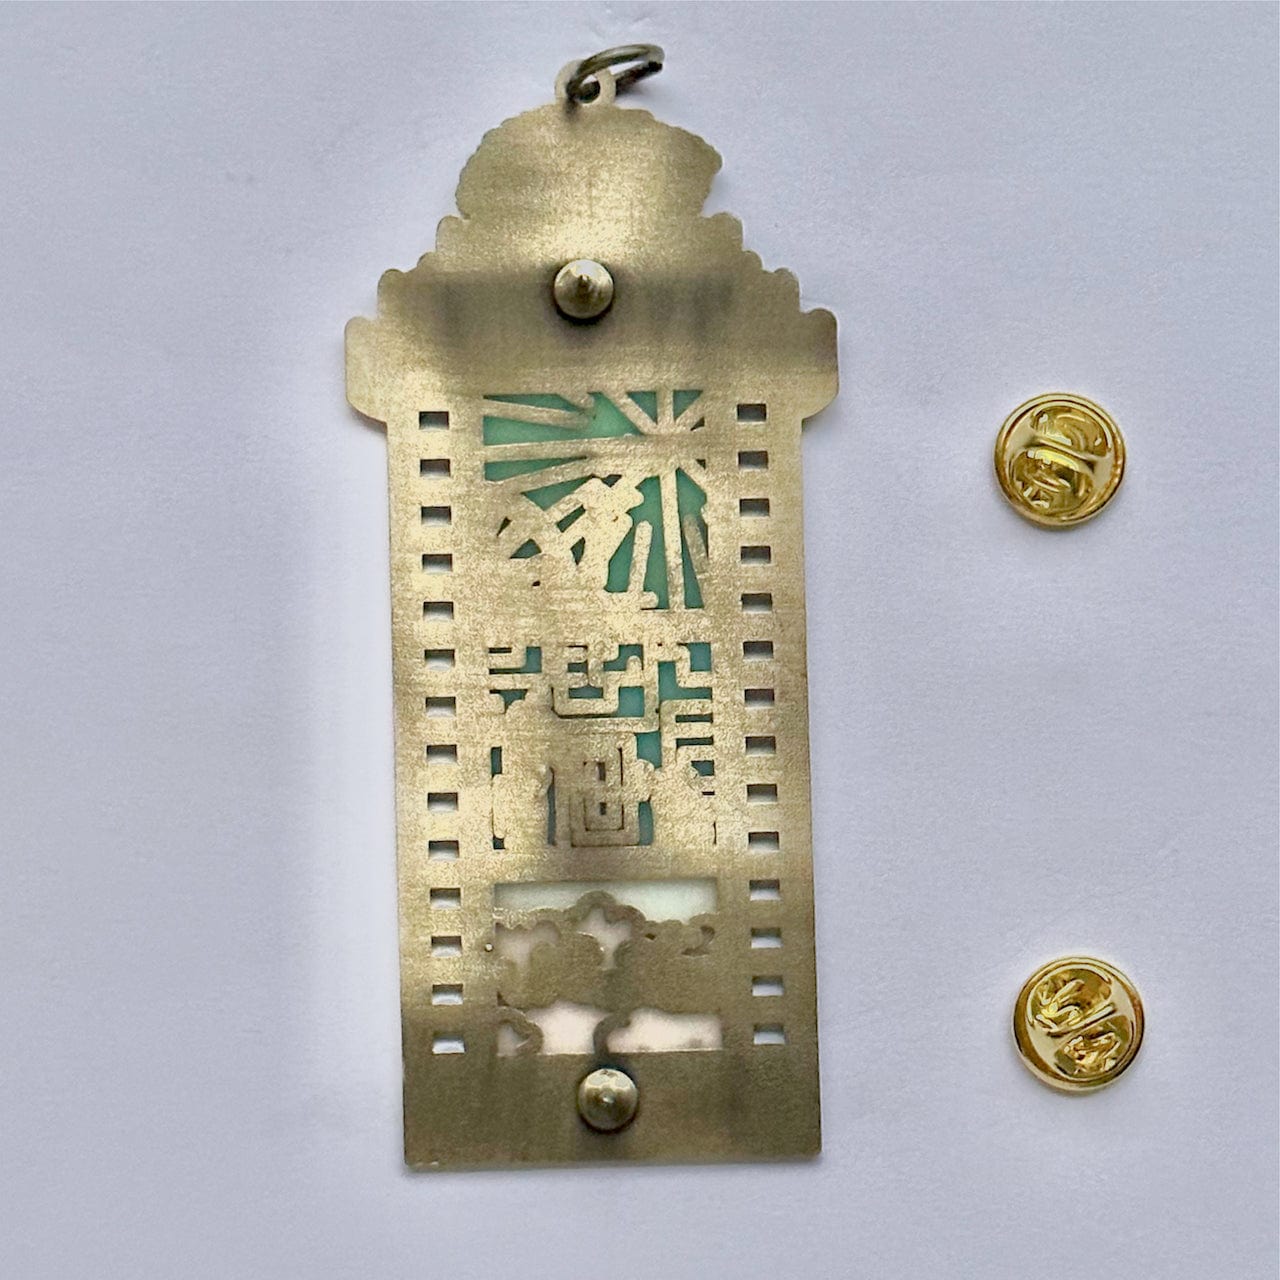 pinbuds Enamel Pin (patreon) "Sky Spirits" Film Strip Pin (stainglass)